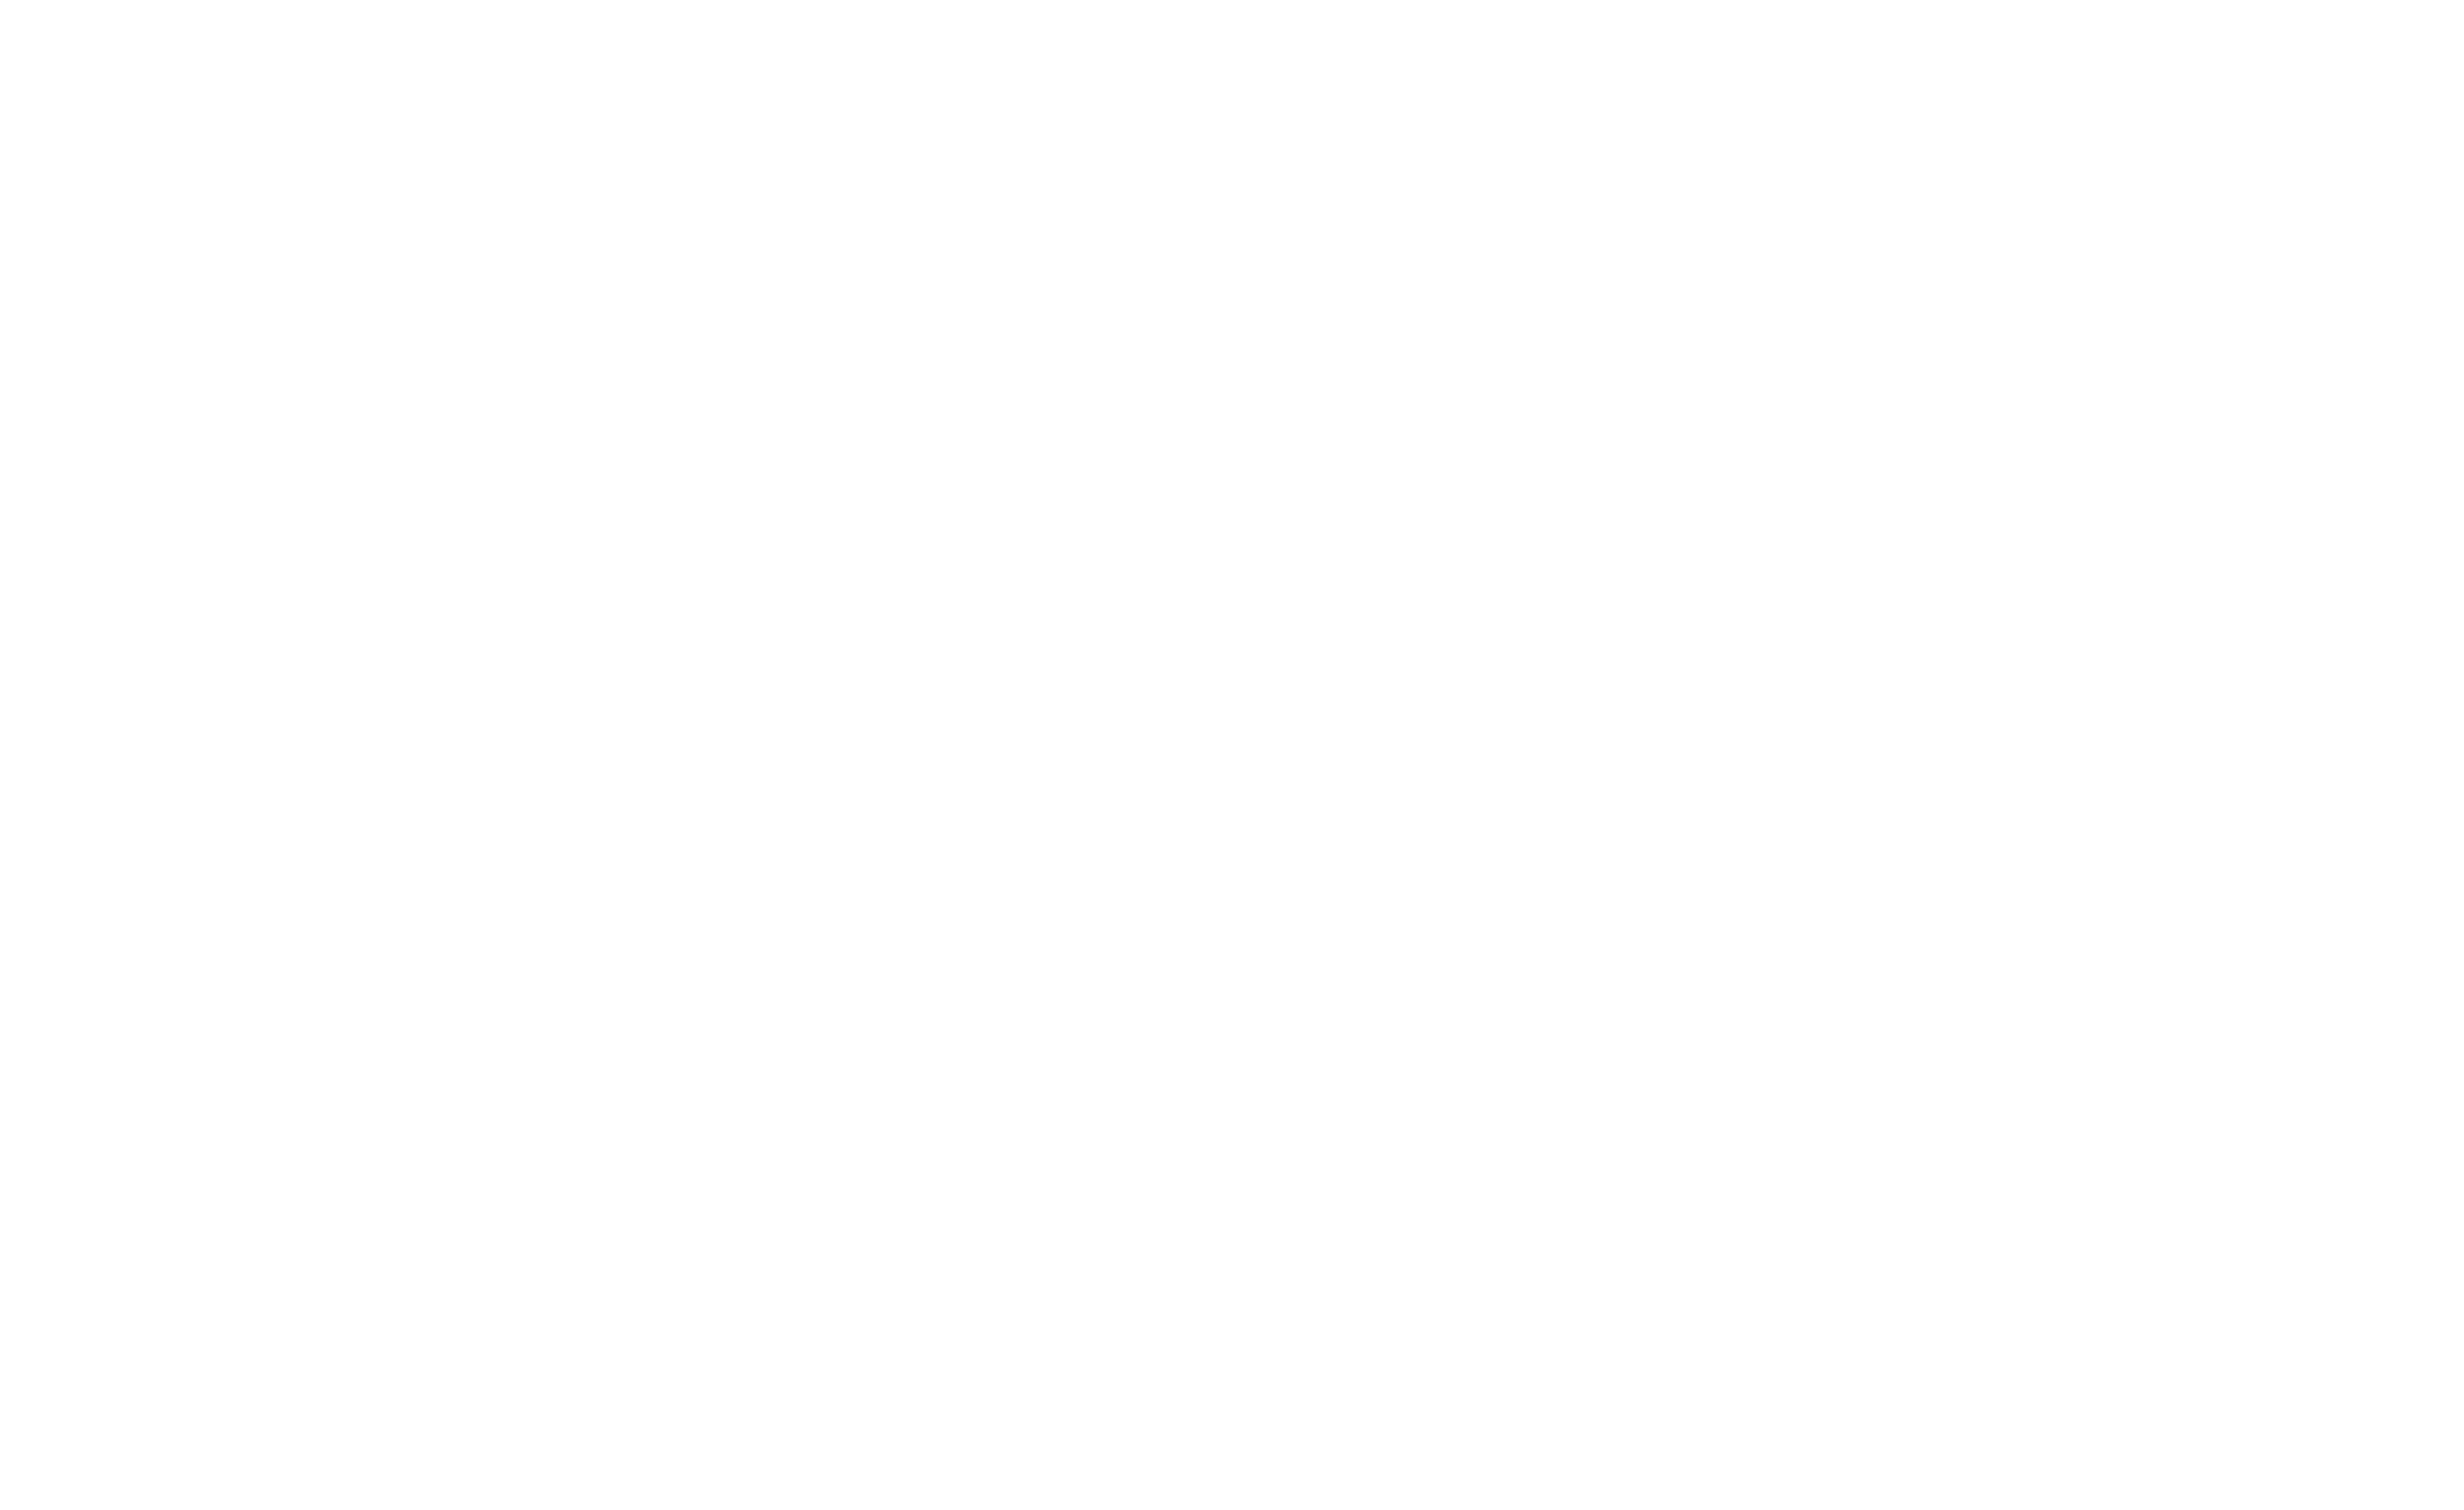 snwomass-mall-logo